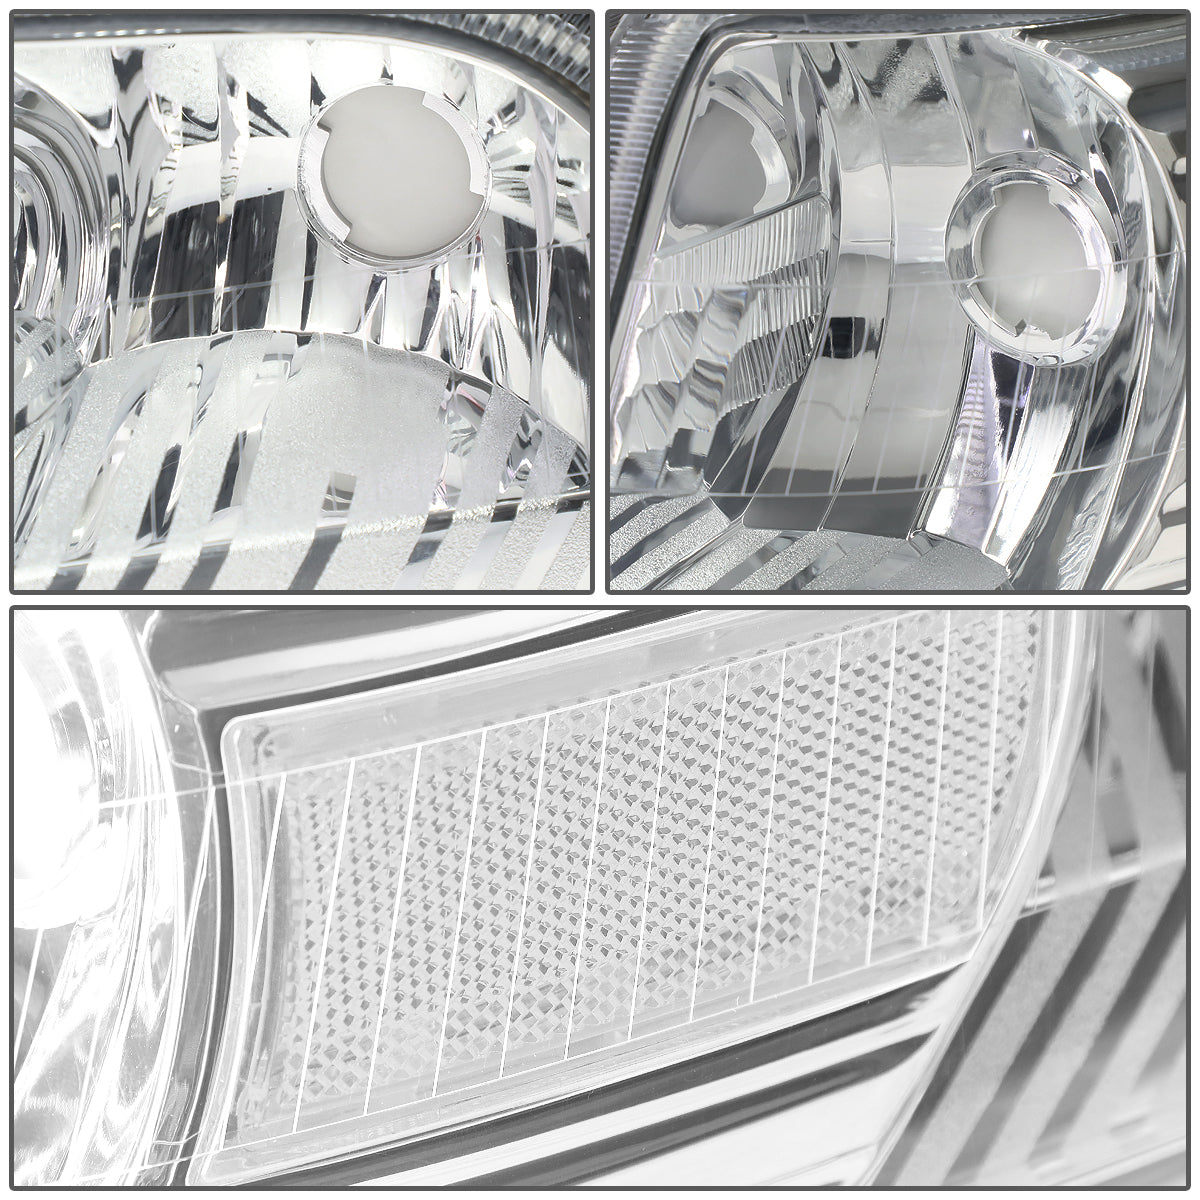 Factory Style Headlights <br>06-11 Mercury Grand Marquis